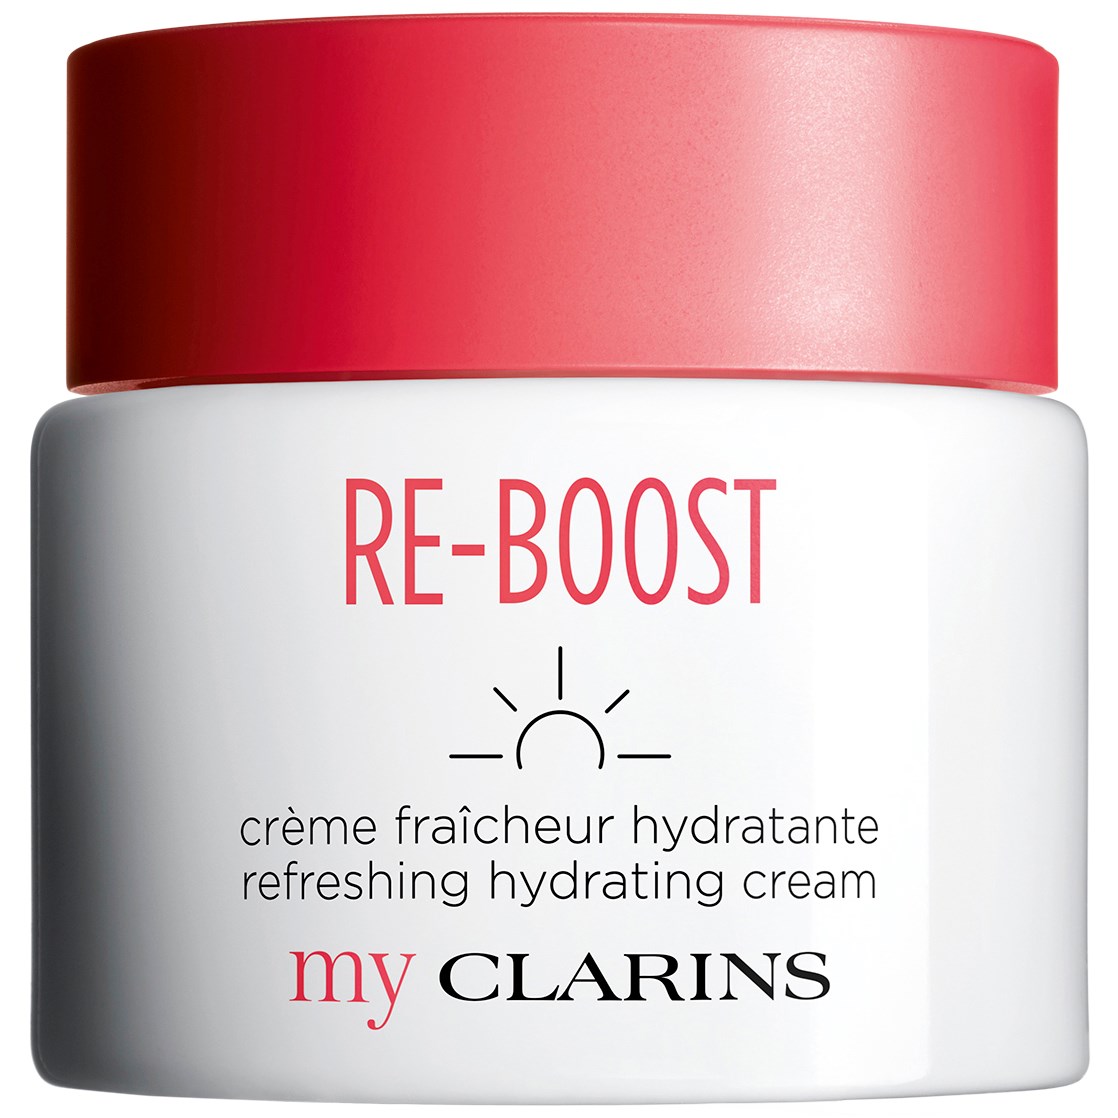 Clarins Myclarins Re-Boost Refreshing hydrating Cream 50 ml